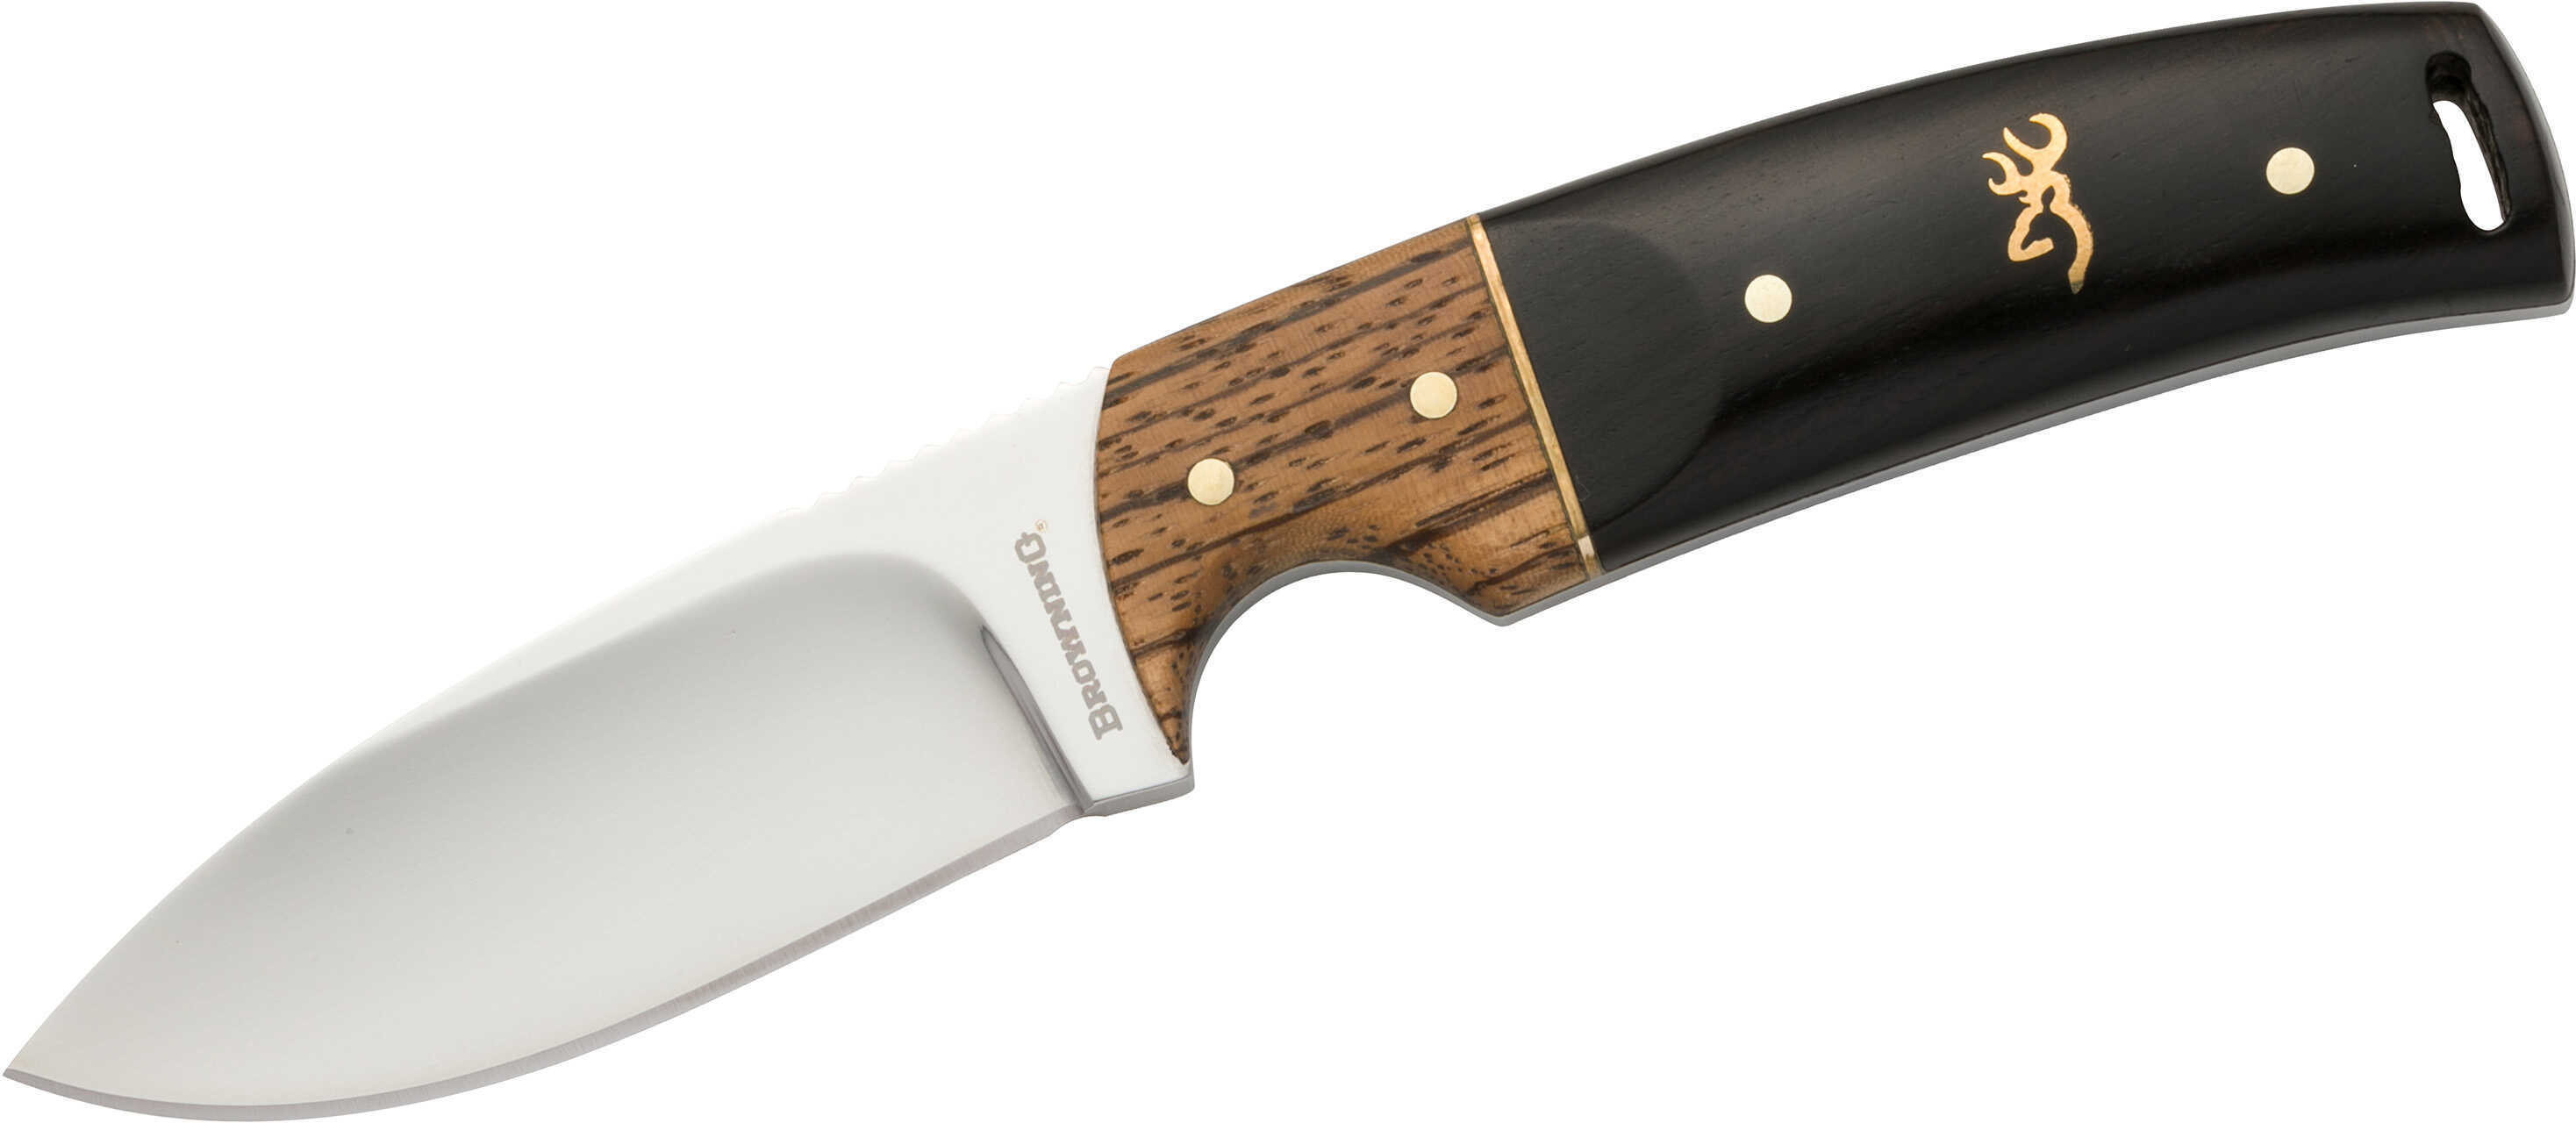 BROWNING FIXED BLADE KNIFE BUCKMARK HUNTER Model: 3220271